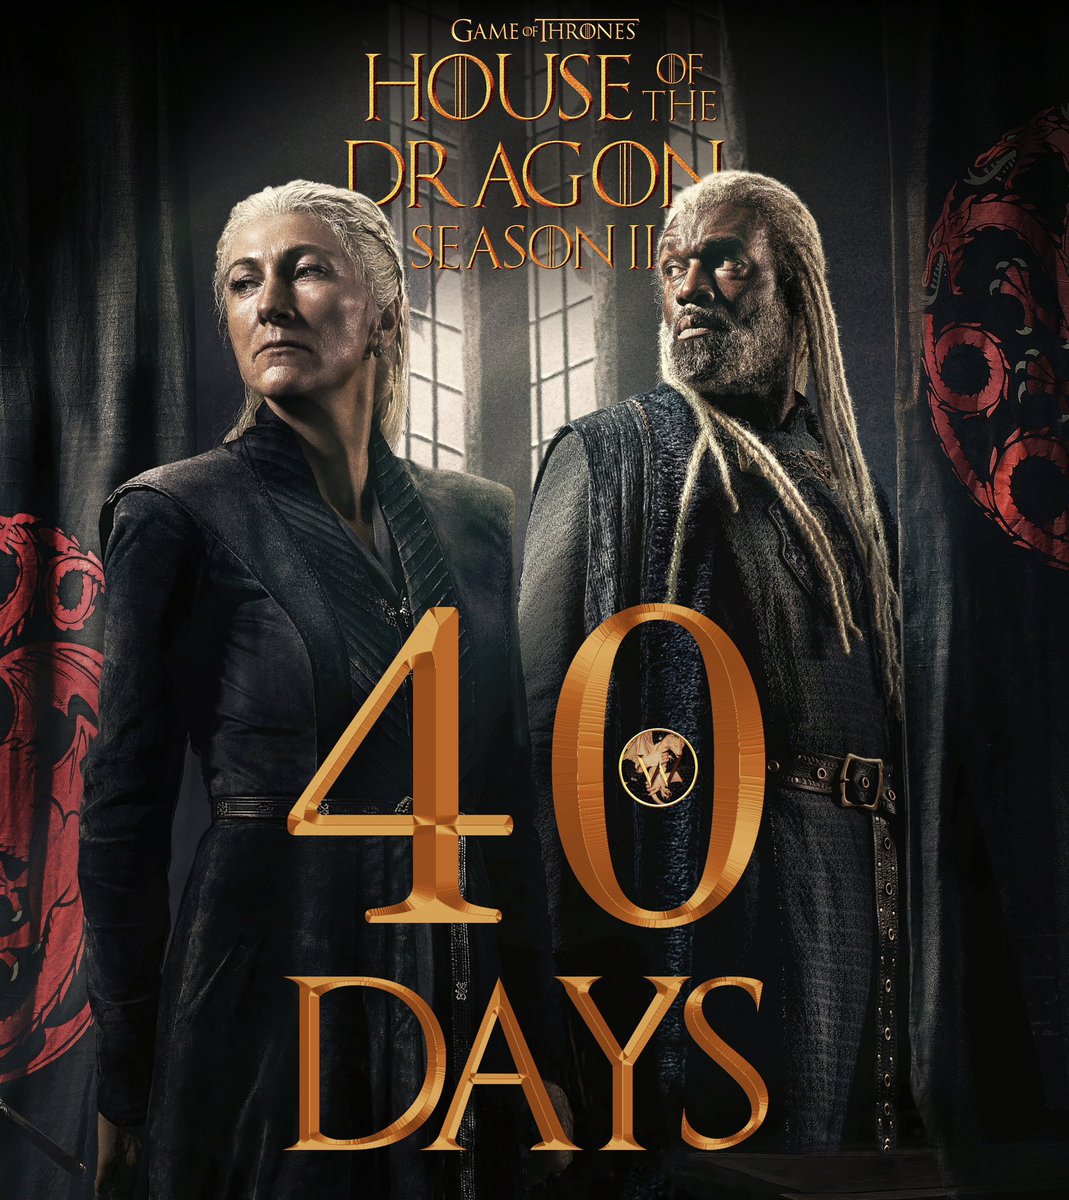 ‘HOUSE OF THE DRAGON’ Season 2 premieres in 40 DAYS! 🐉